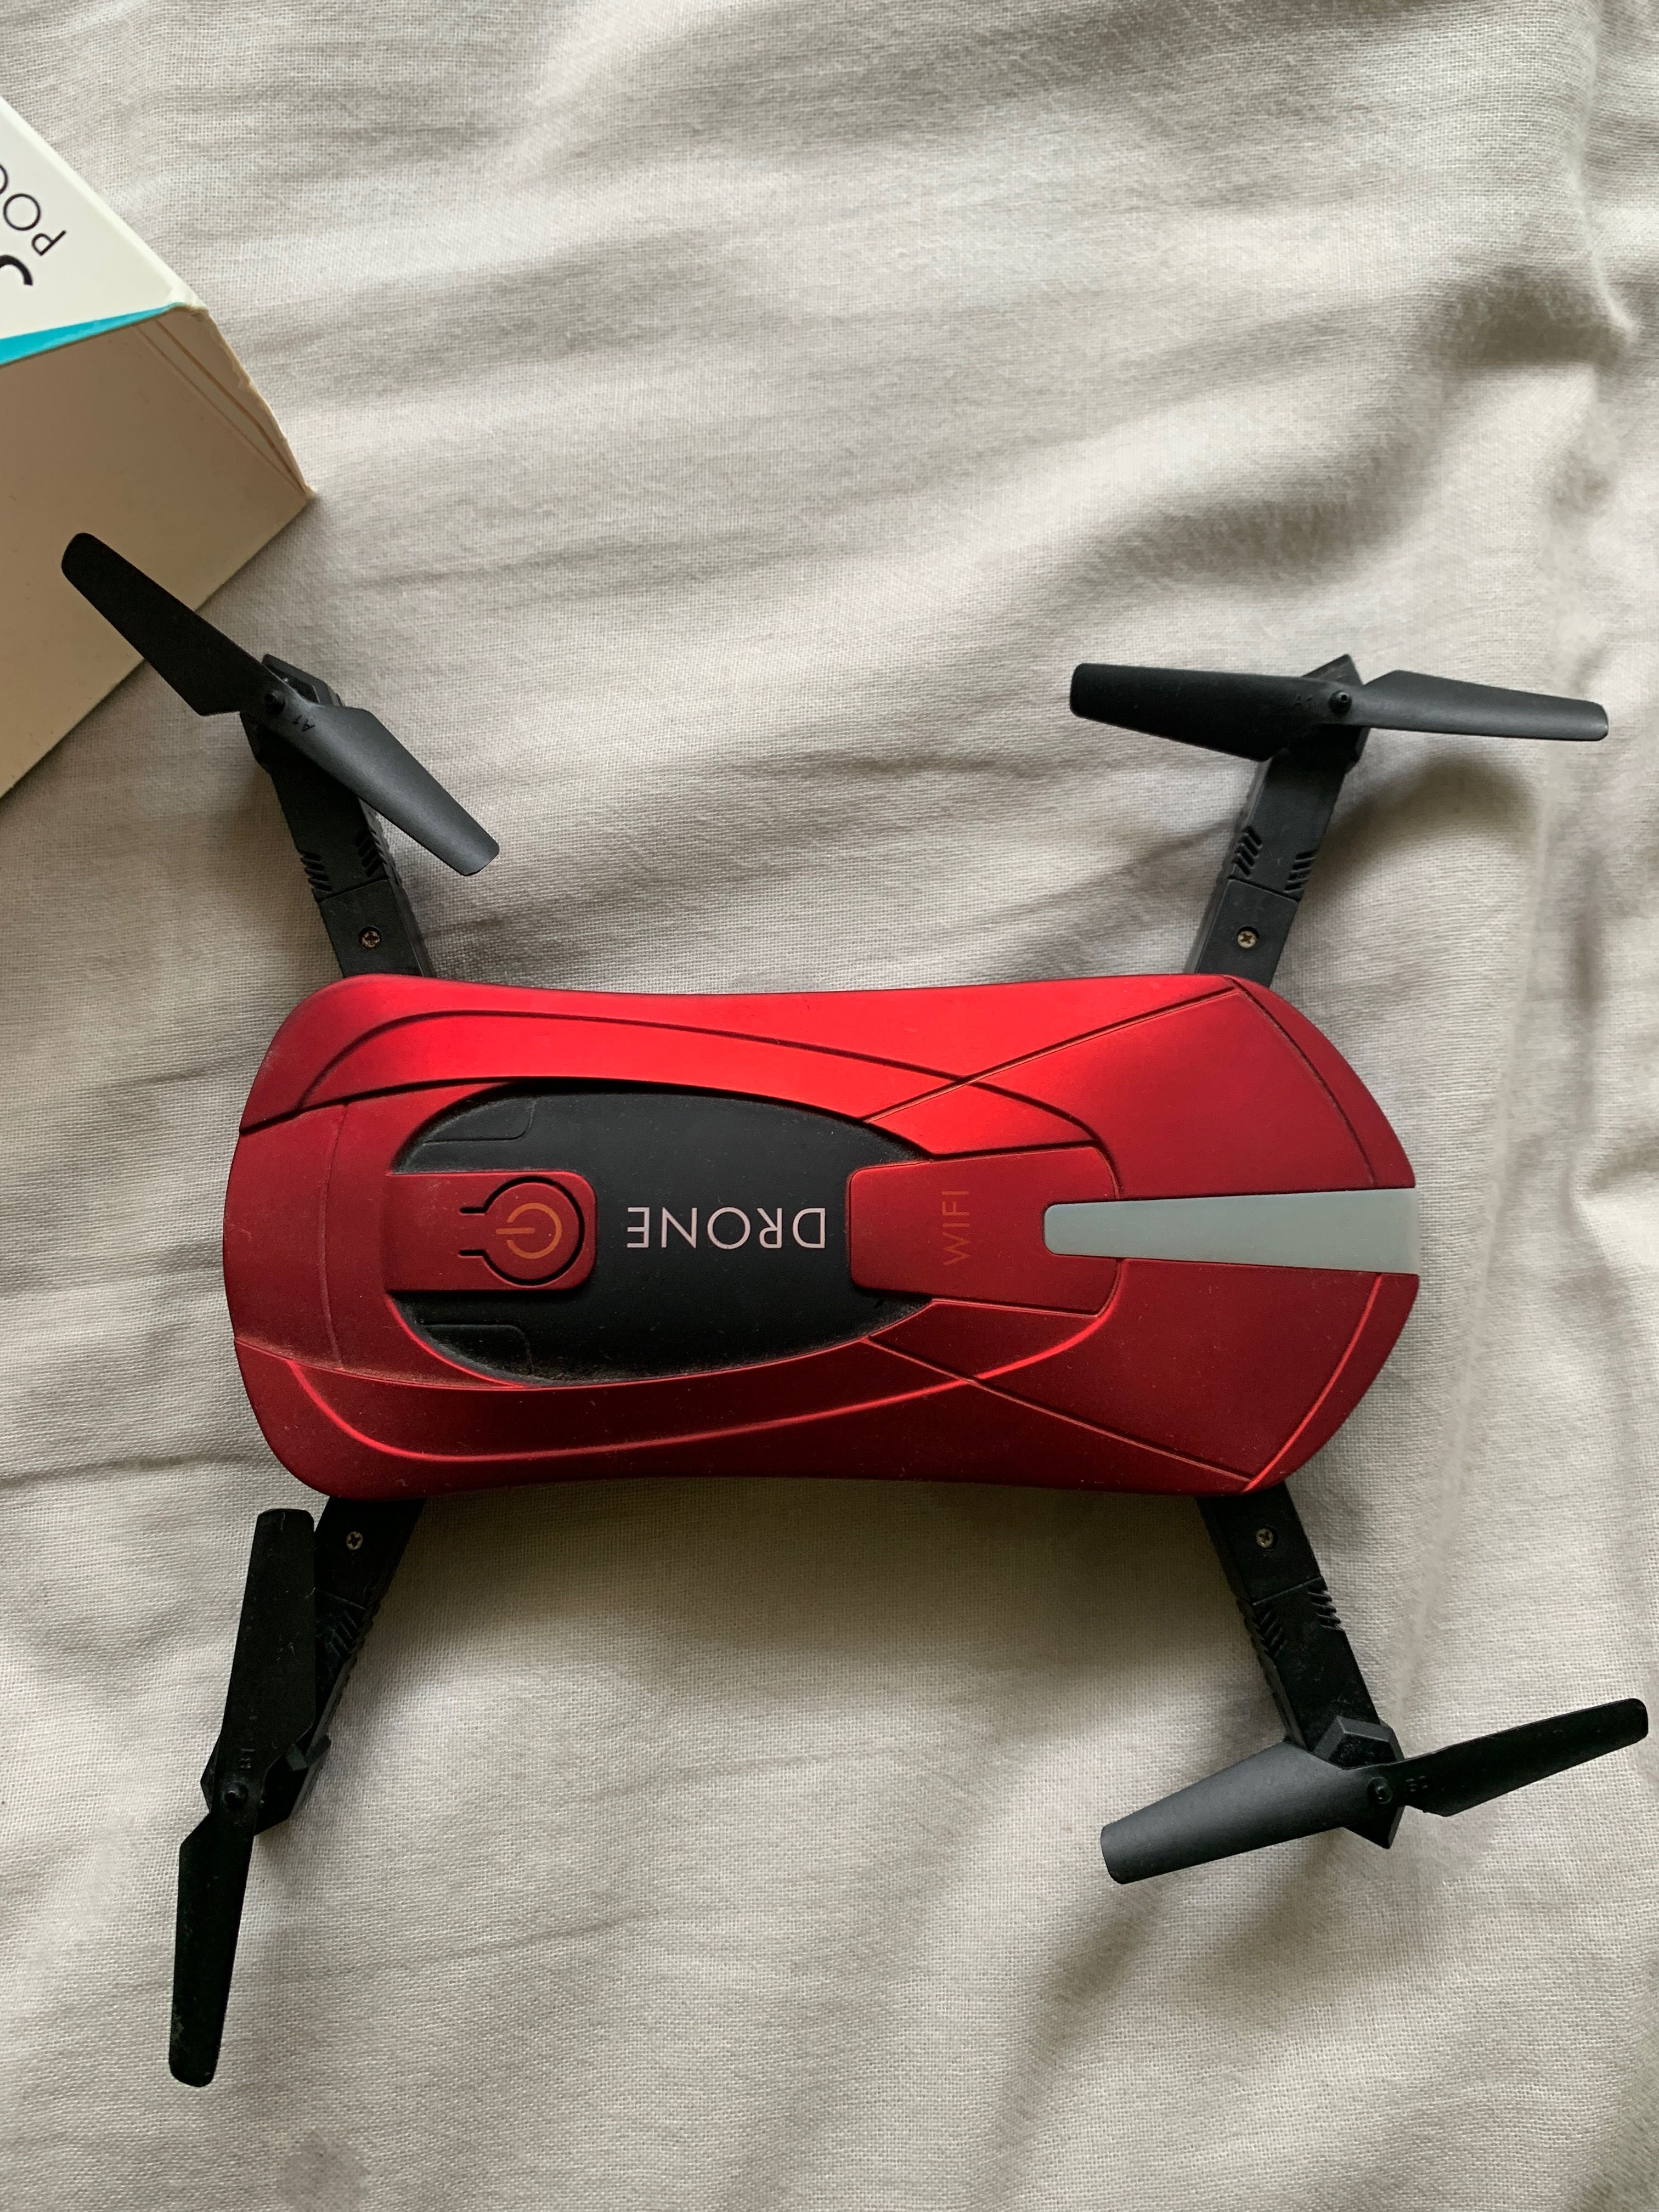 Drone JYO18 pocket drone